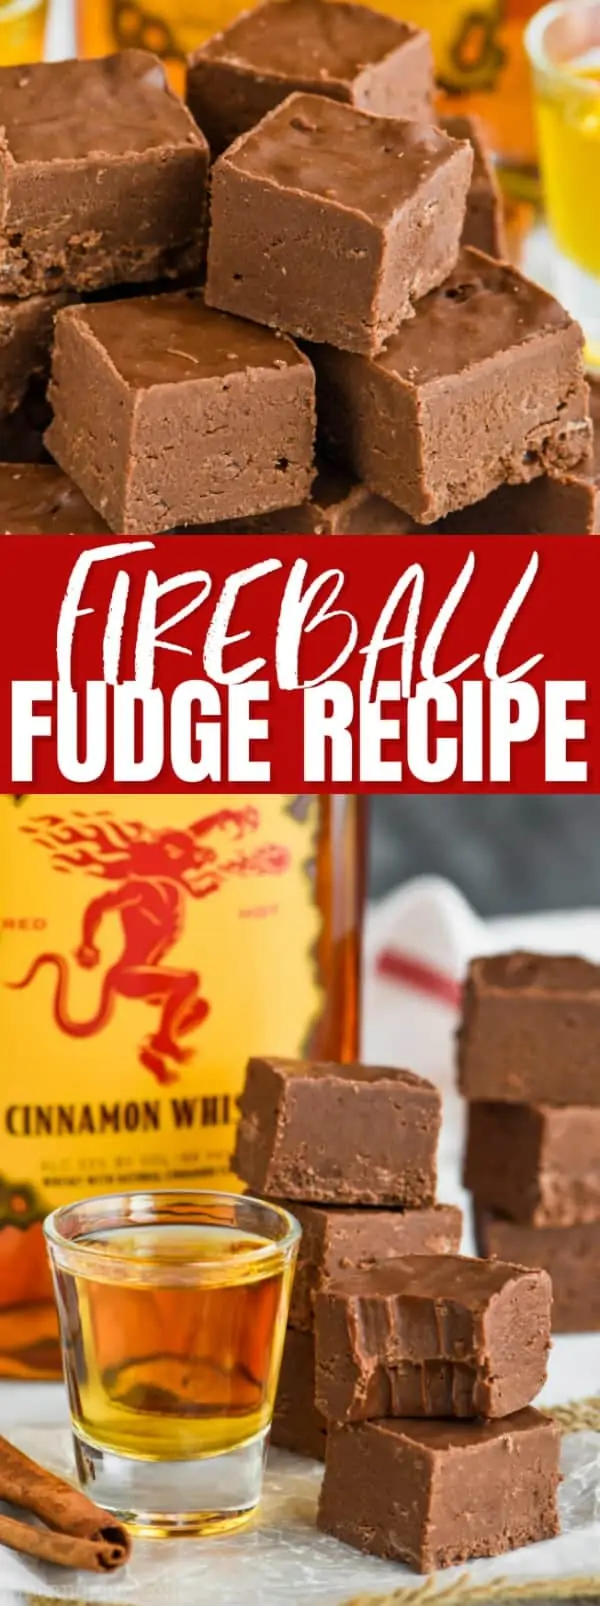 easy fireball fudge recipe, fudge made with whiskey